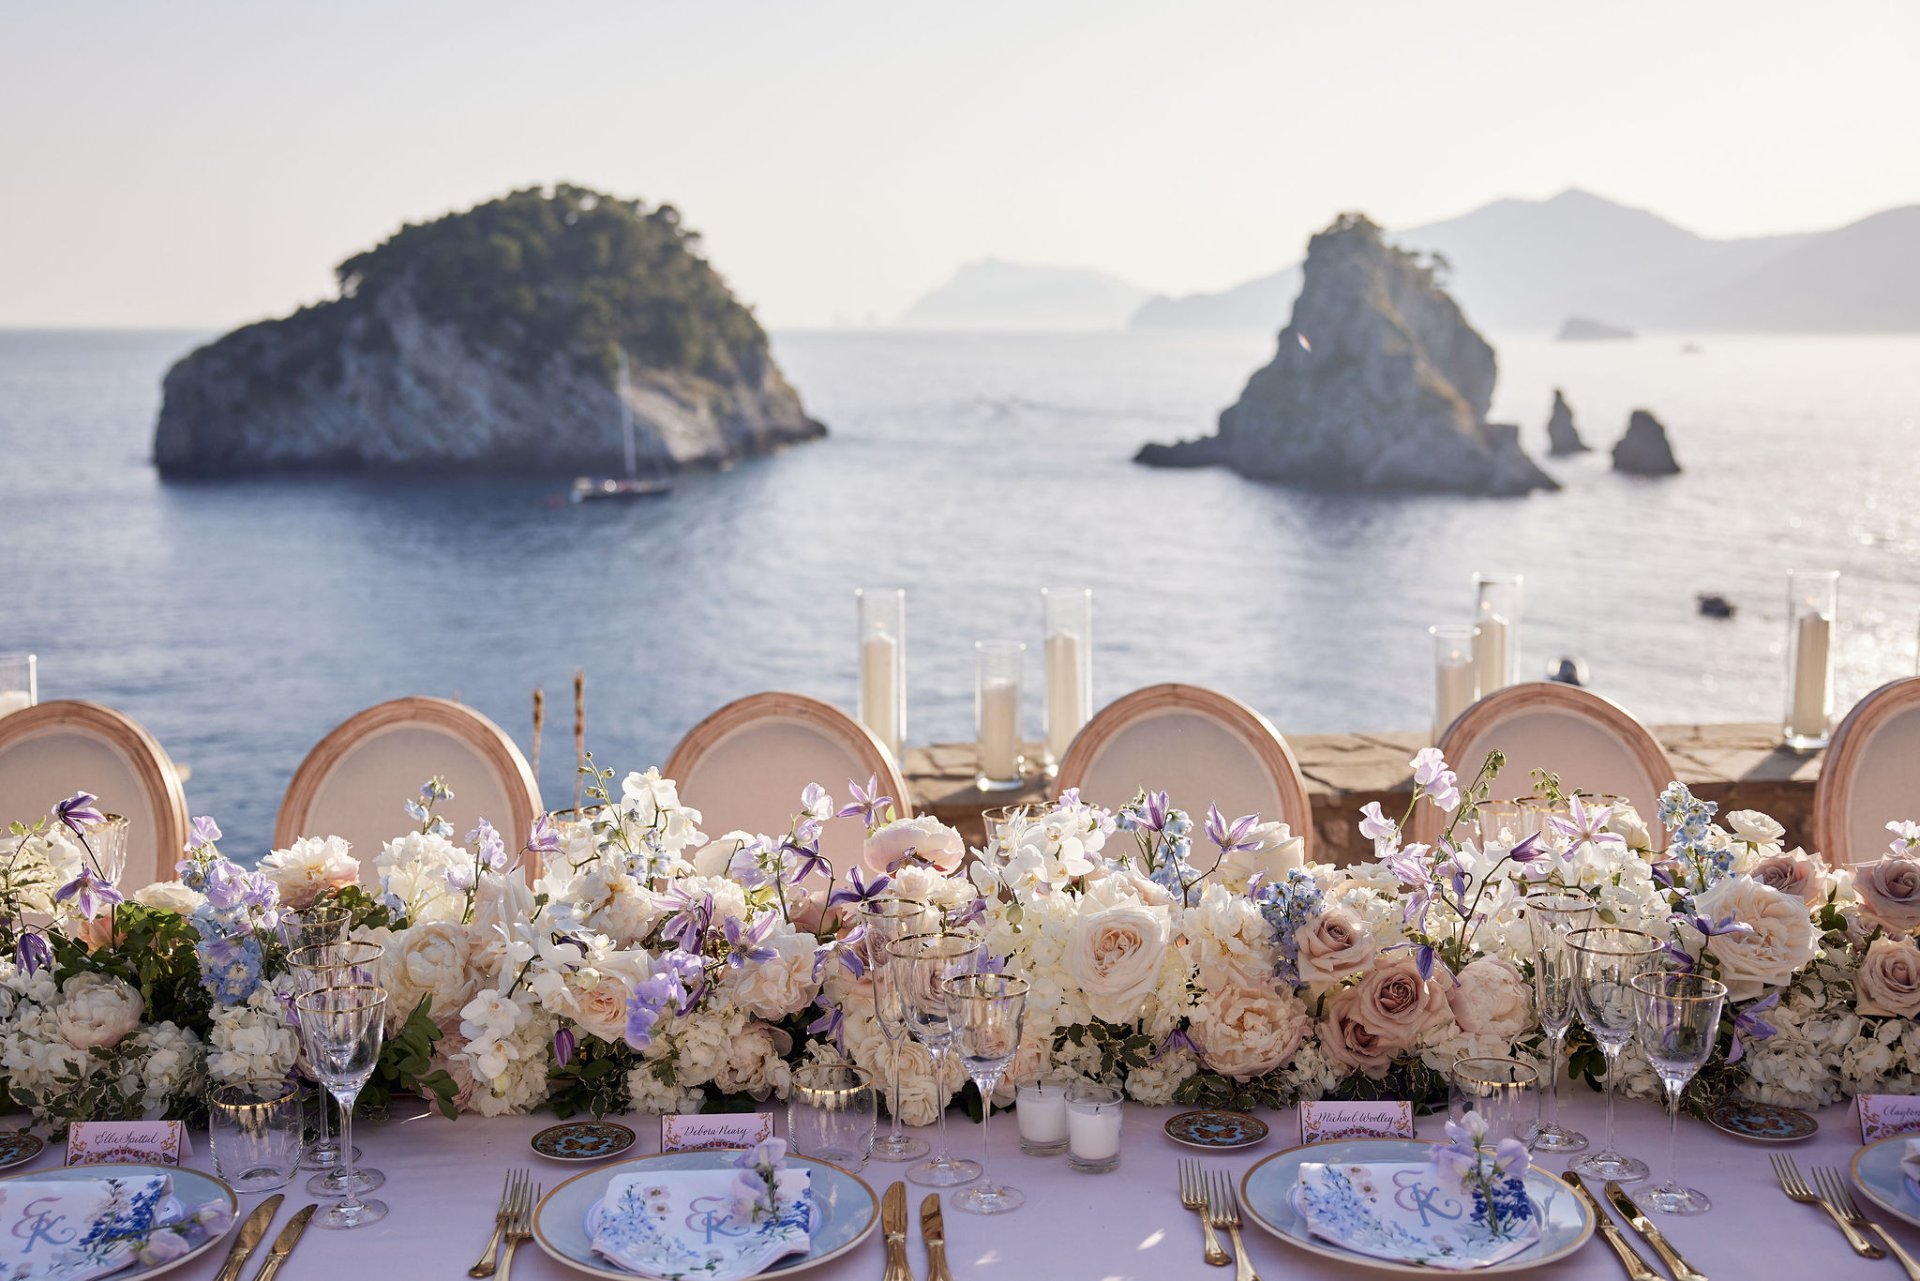 Imperial wedding table overlooking the rocks of li galli